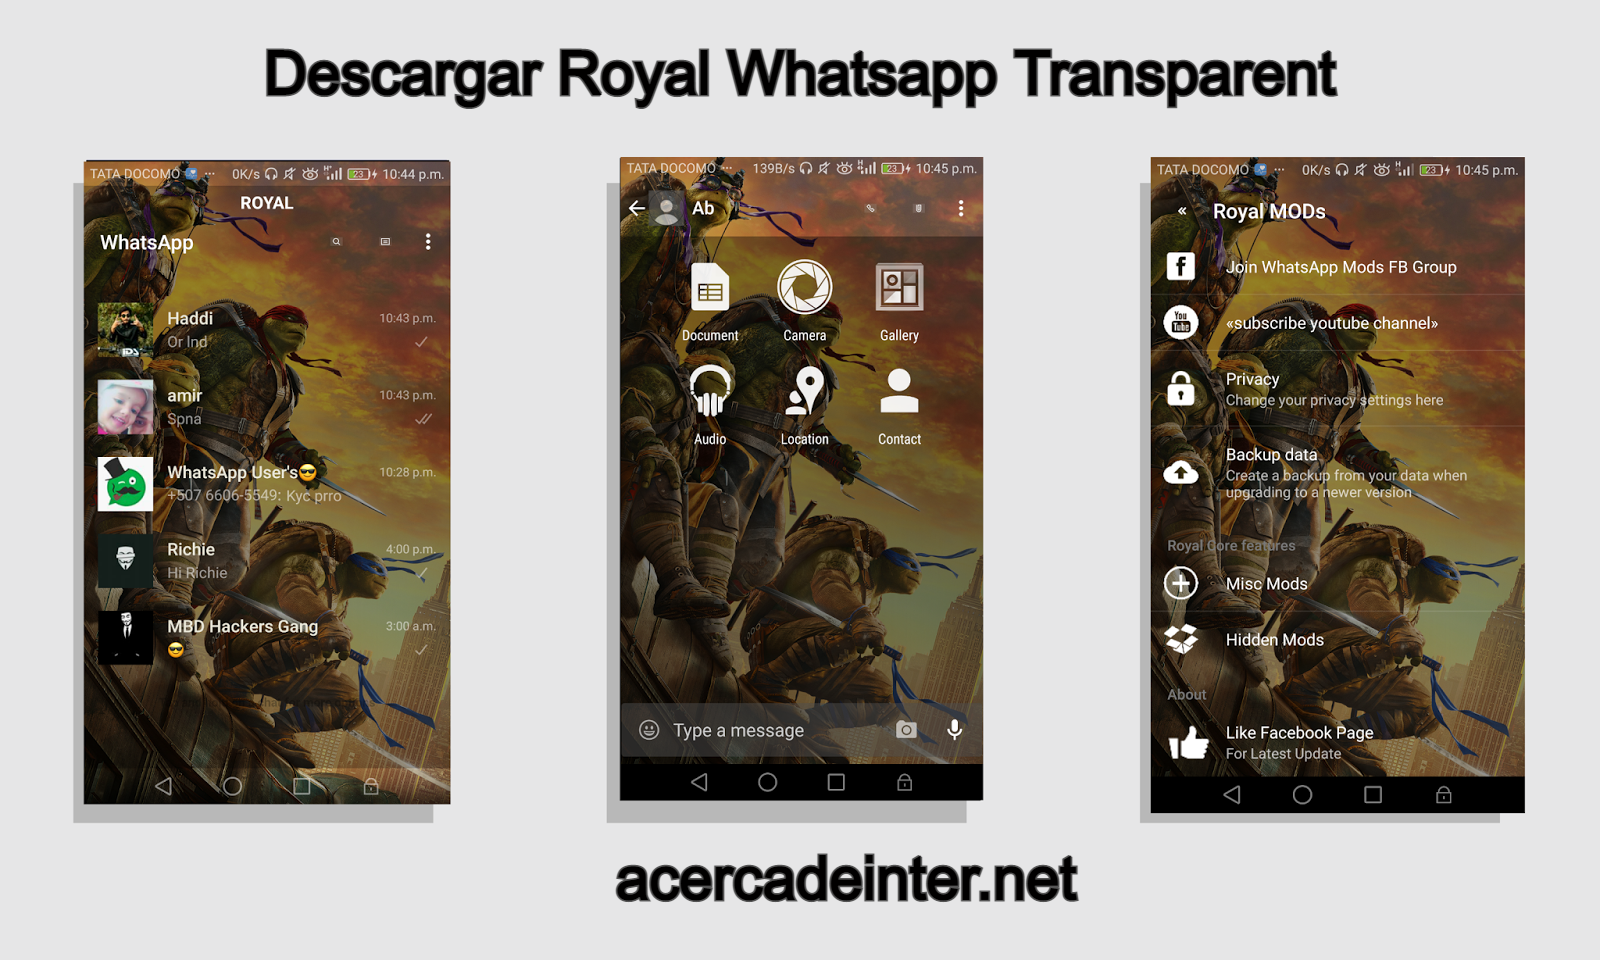 Descargar Royal WhatsApp Transparent